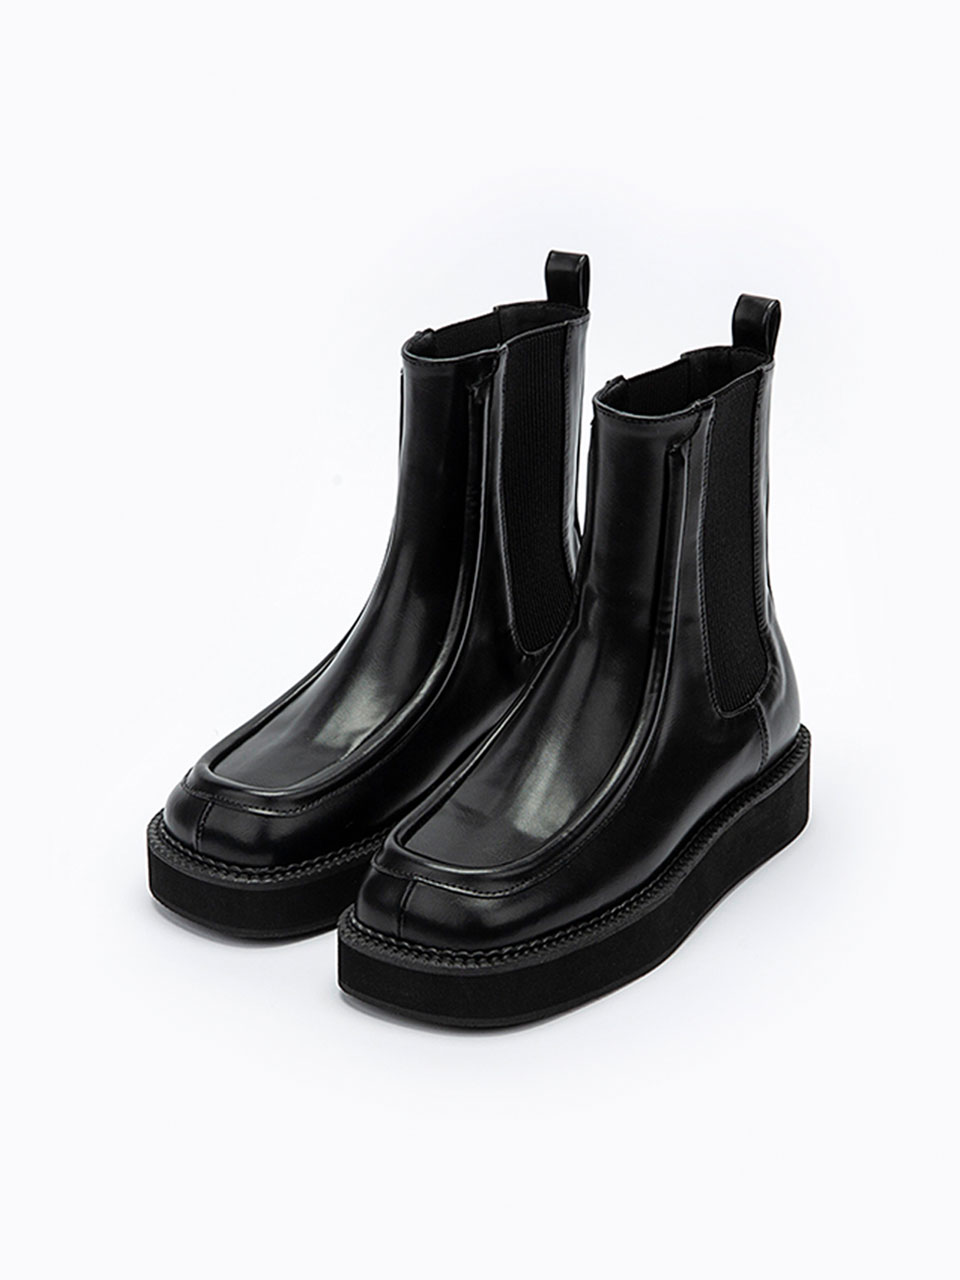 Chelsea Lane Boots (Black)